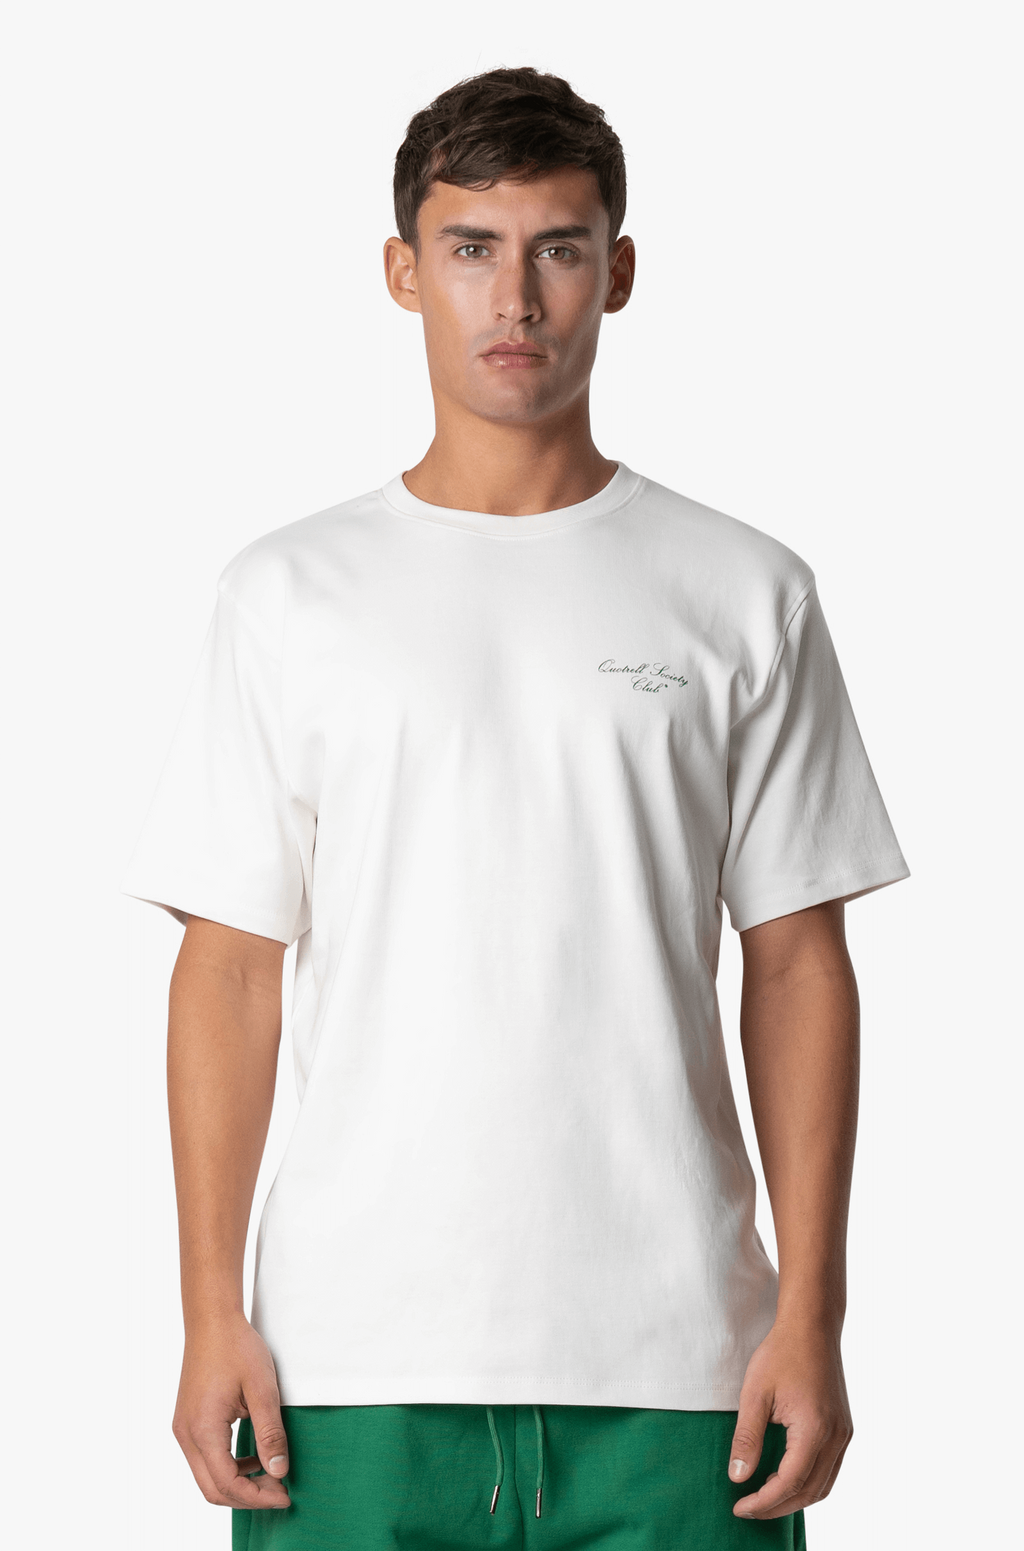 Quotrell Society Club T-shirt